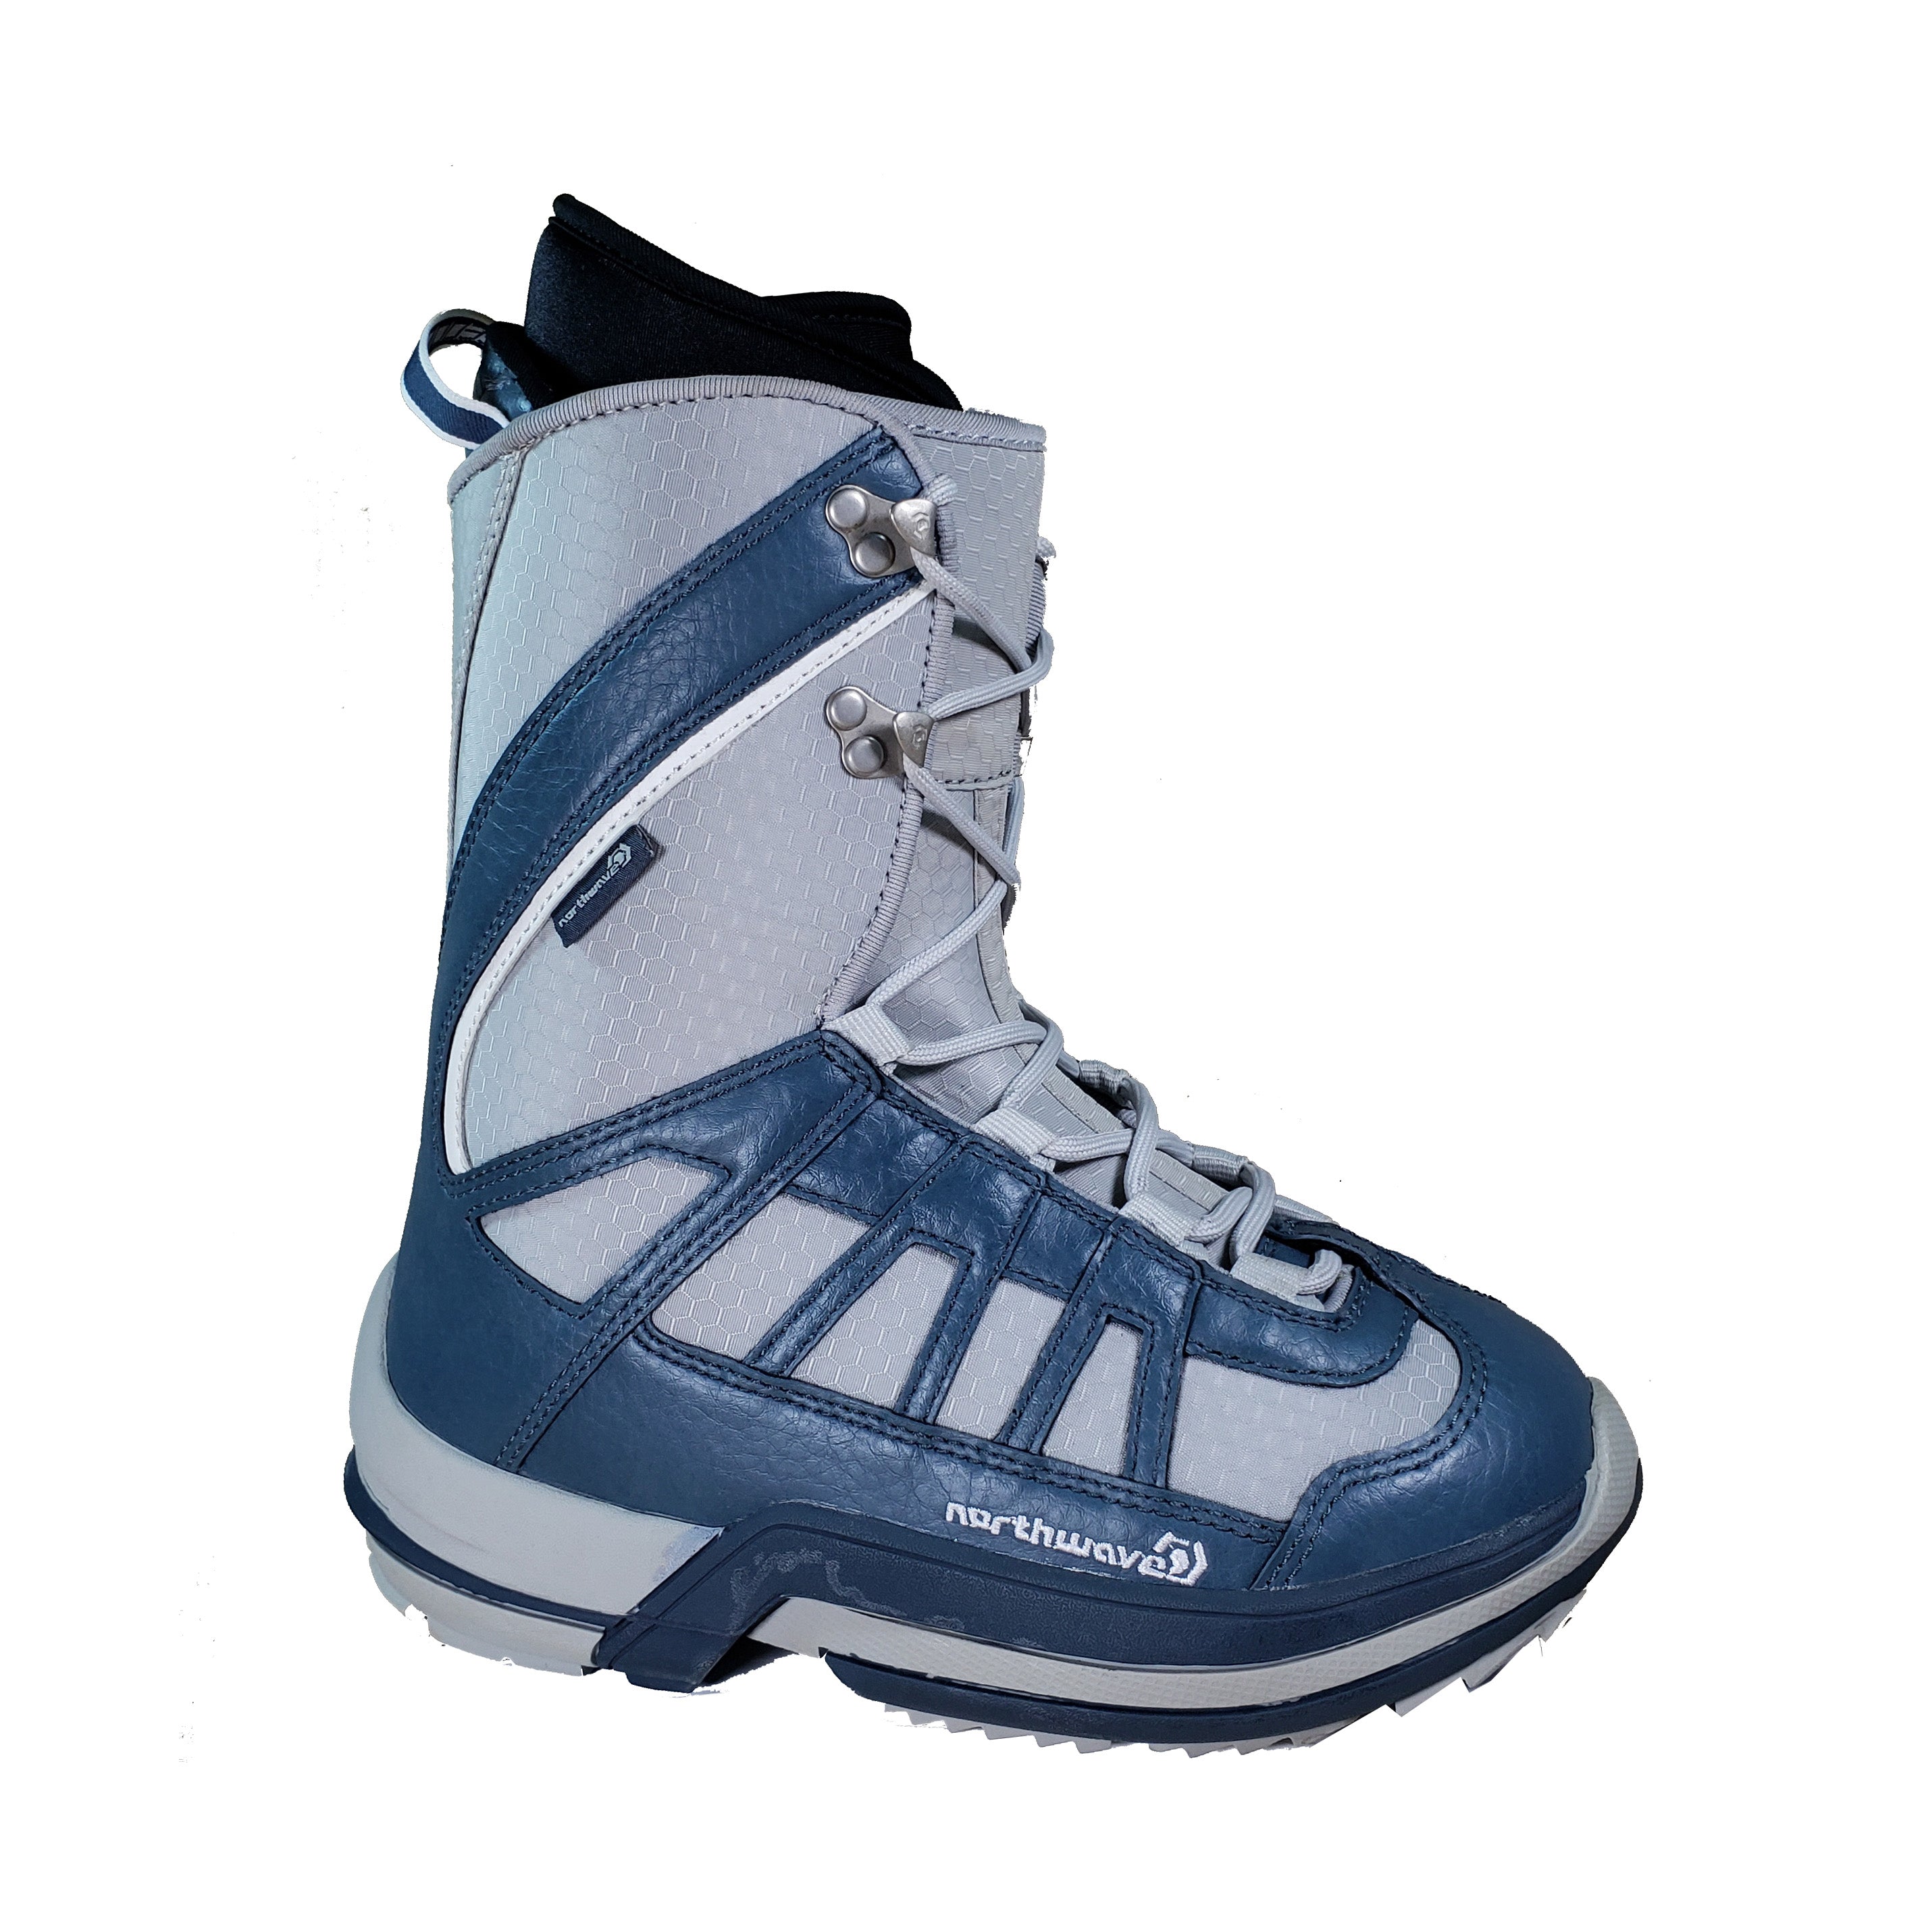 northwave freedom snowboard boots